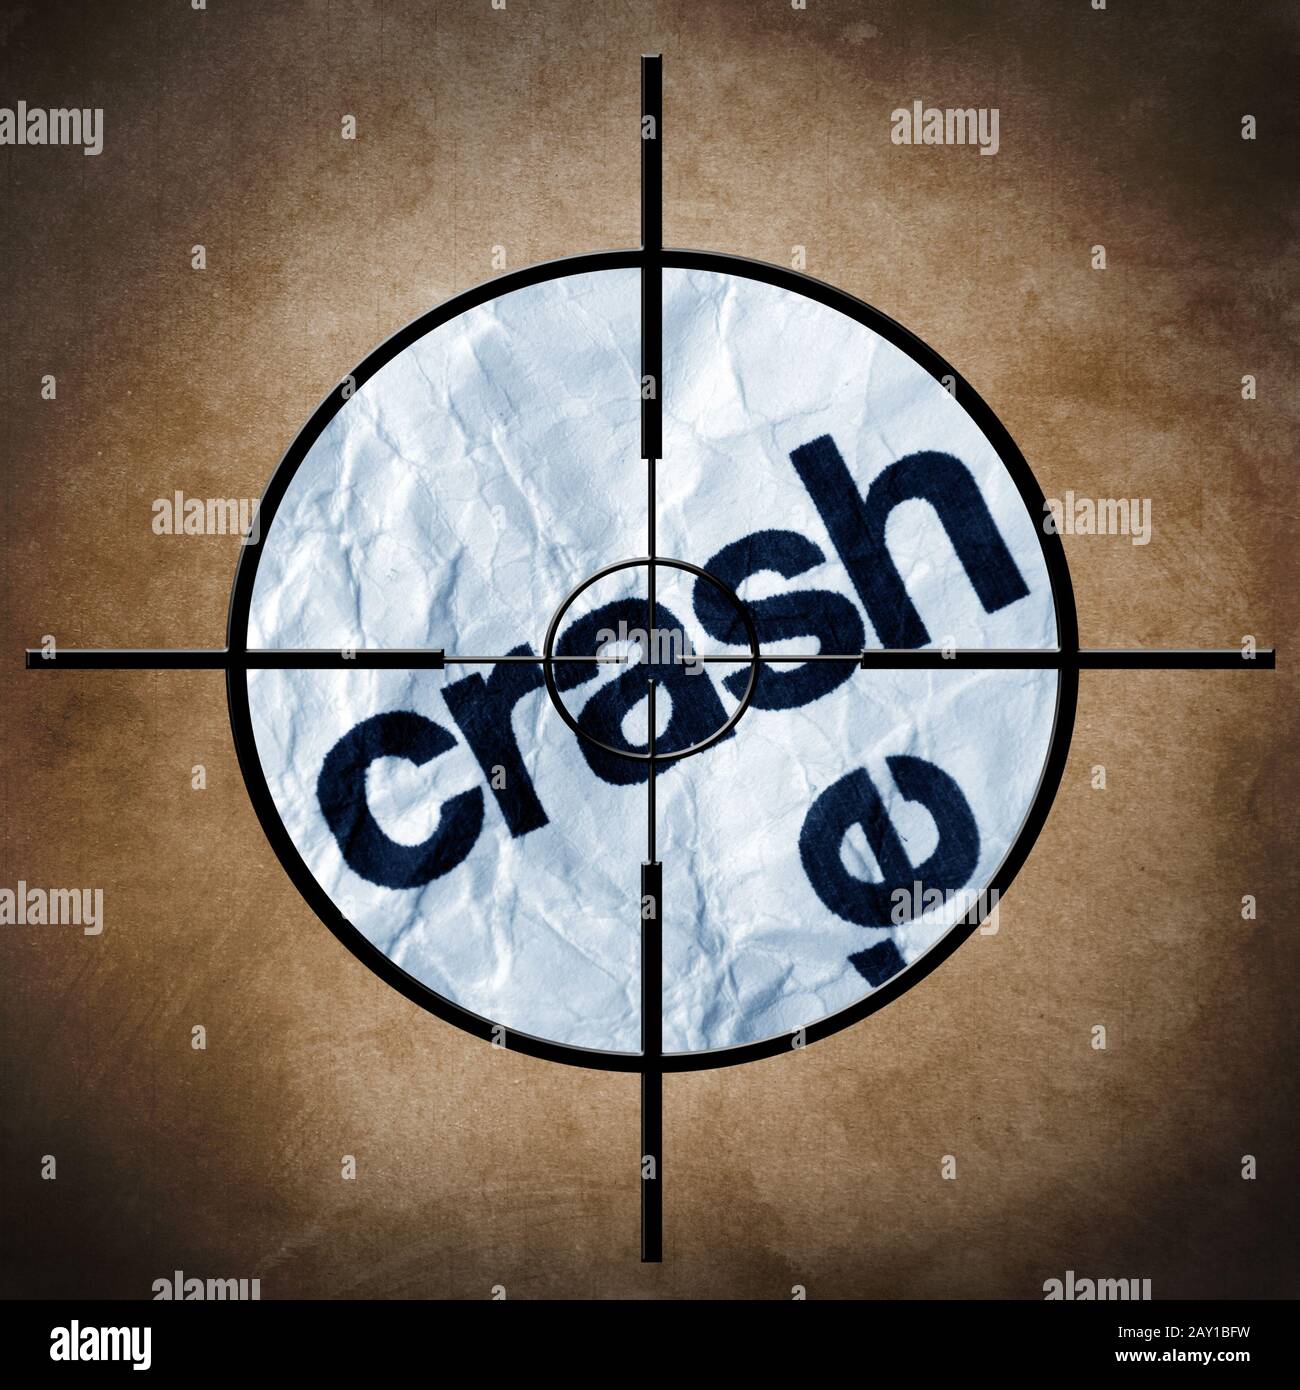 Crash target concept Stock Photo